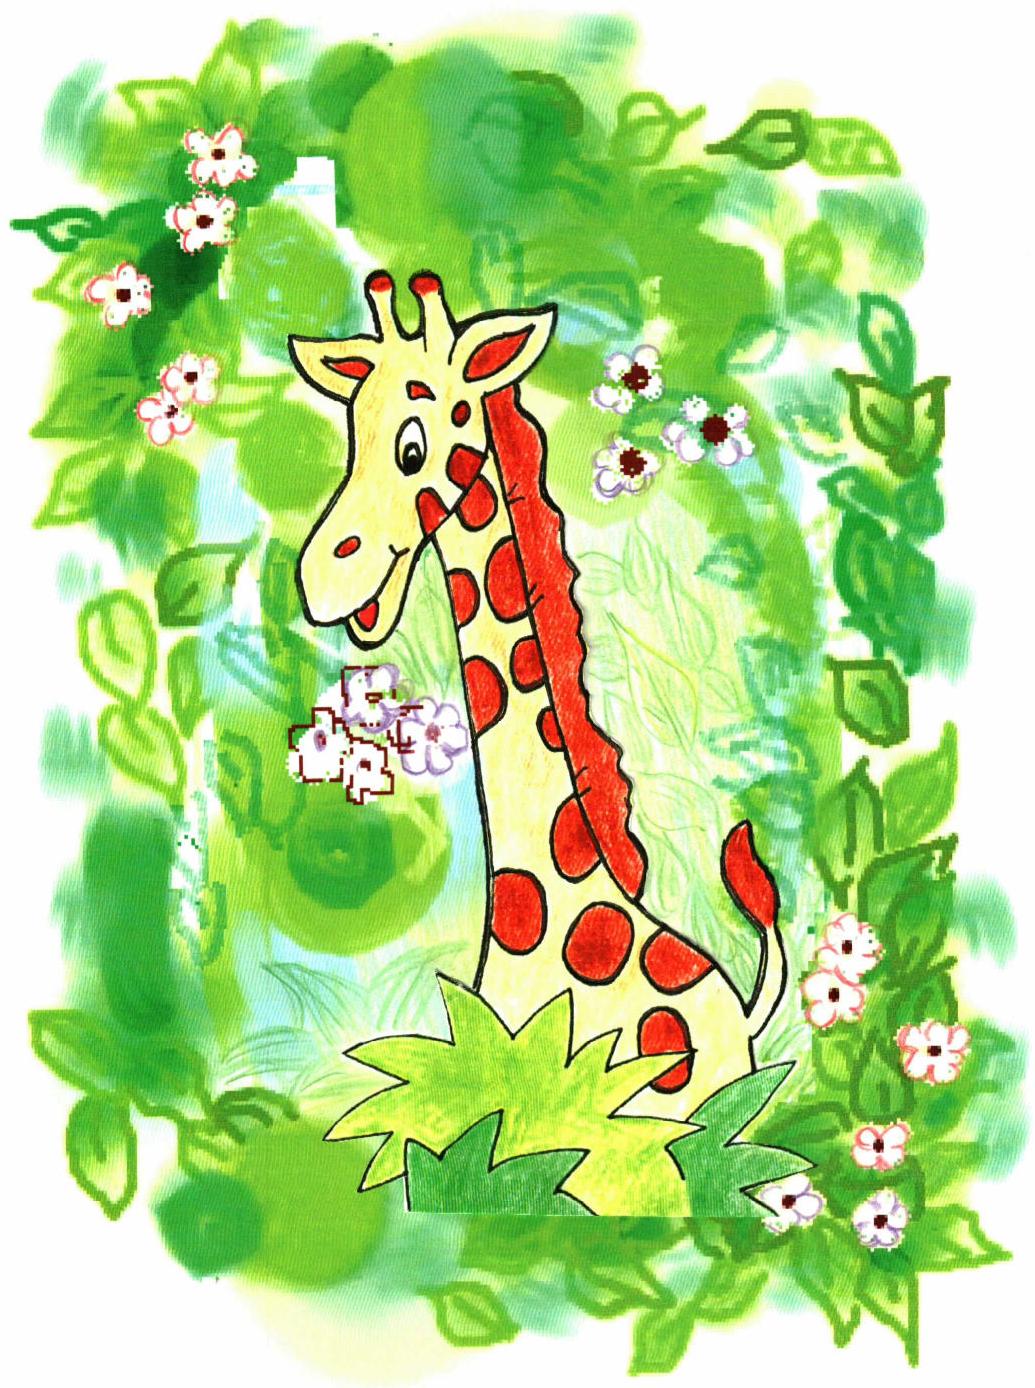 Garry, the funny giraffe